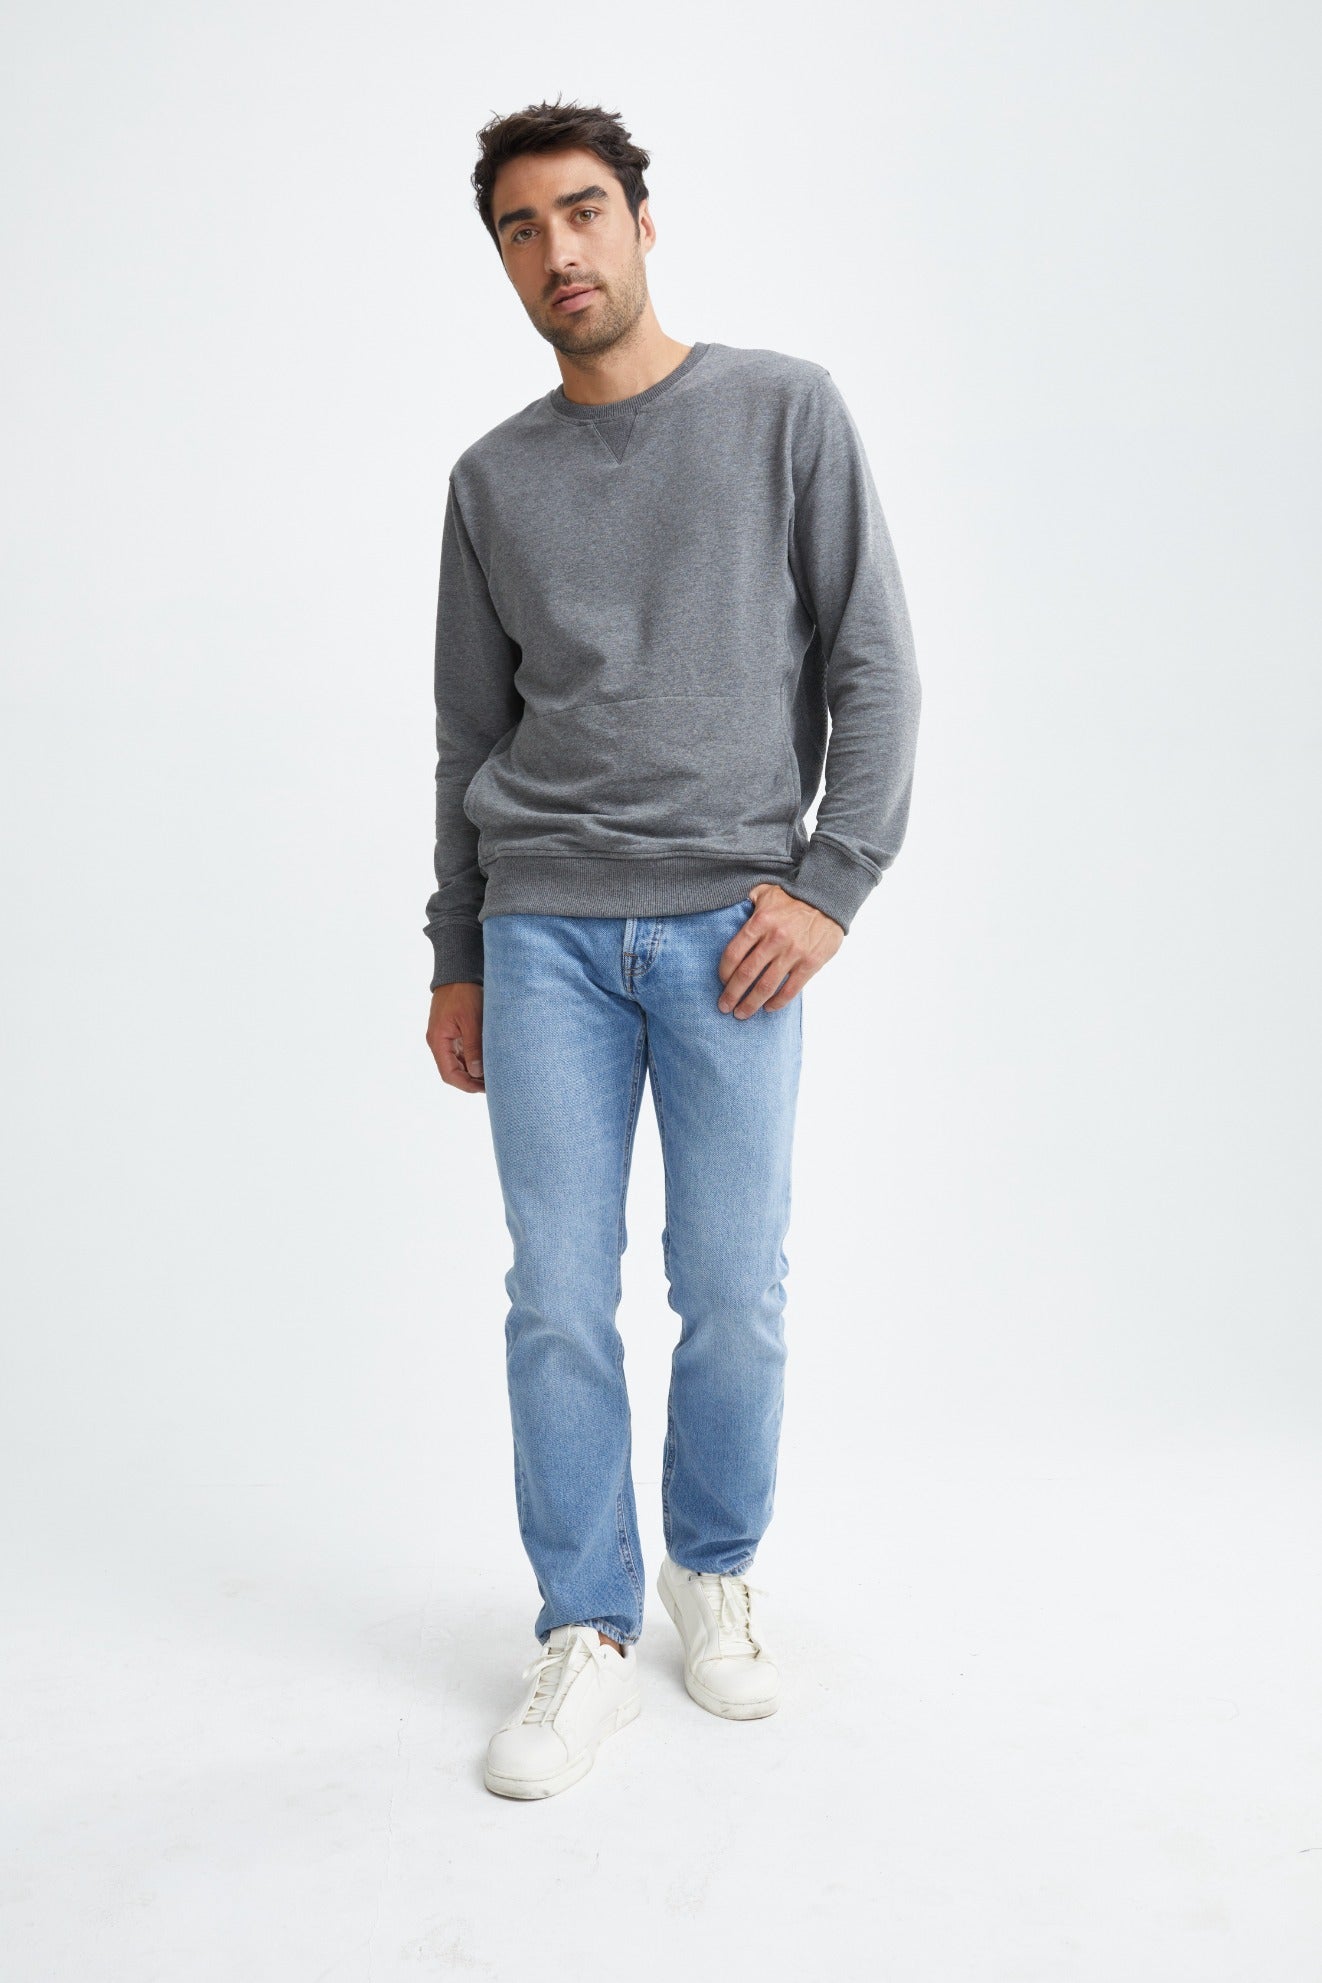 Grey Design Sweater